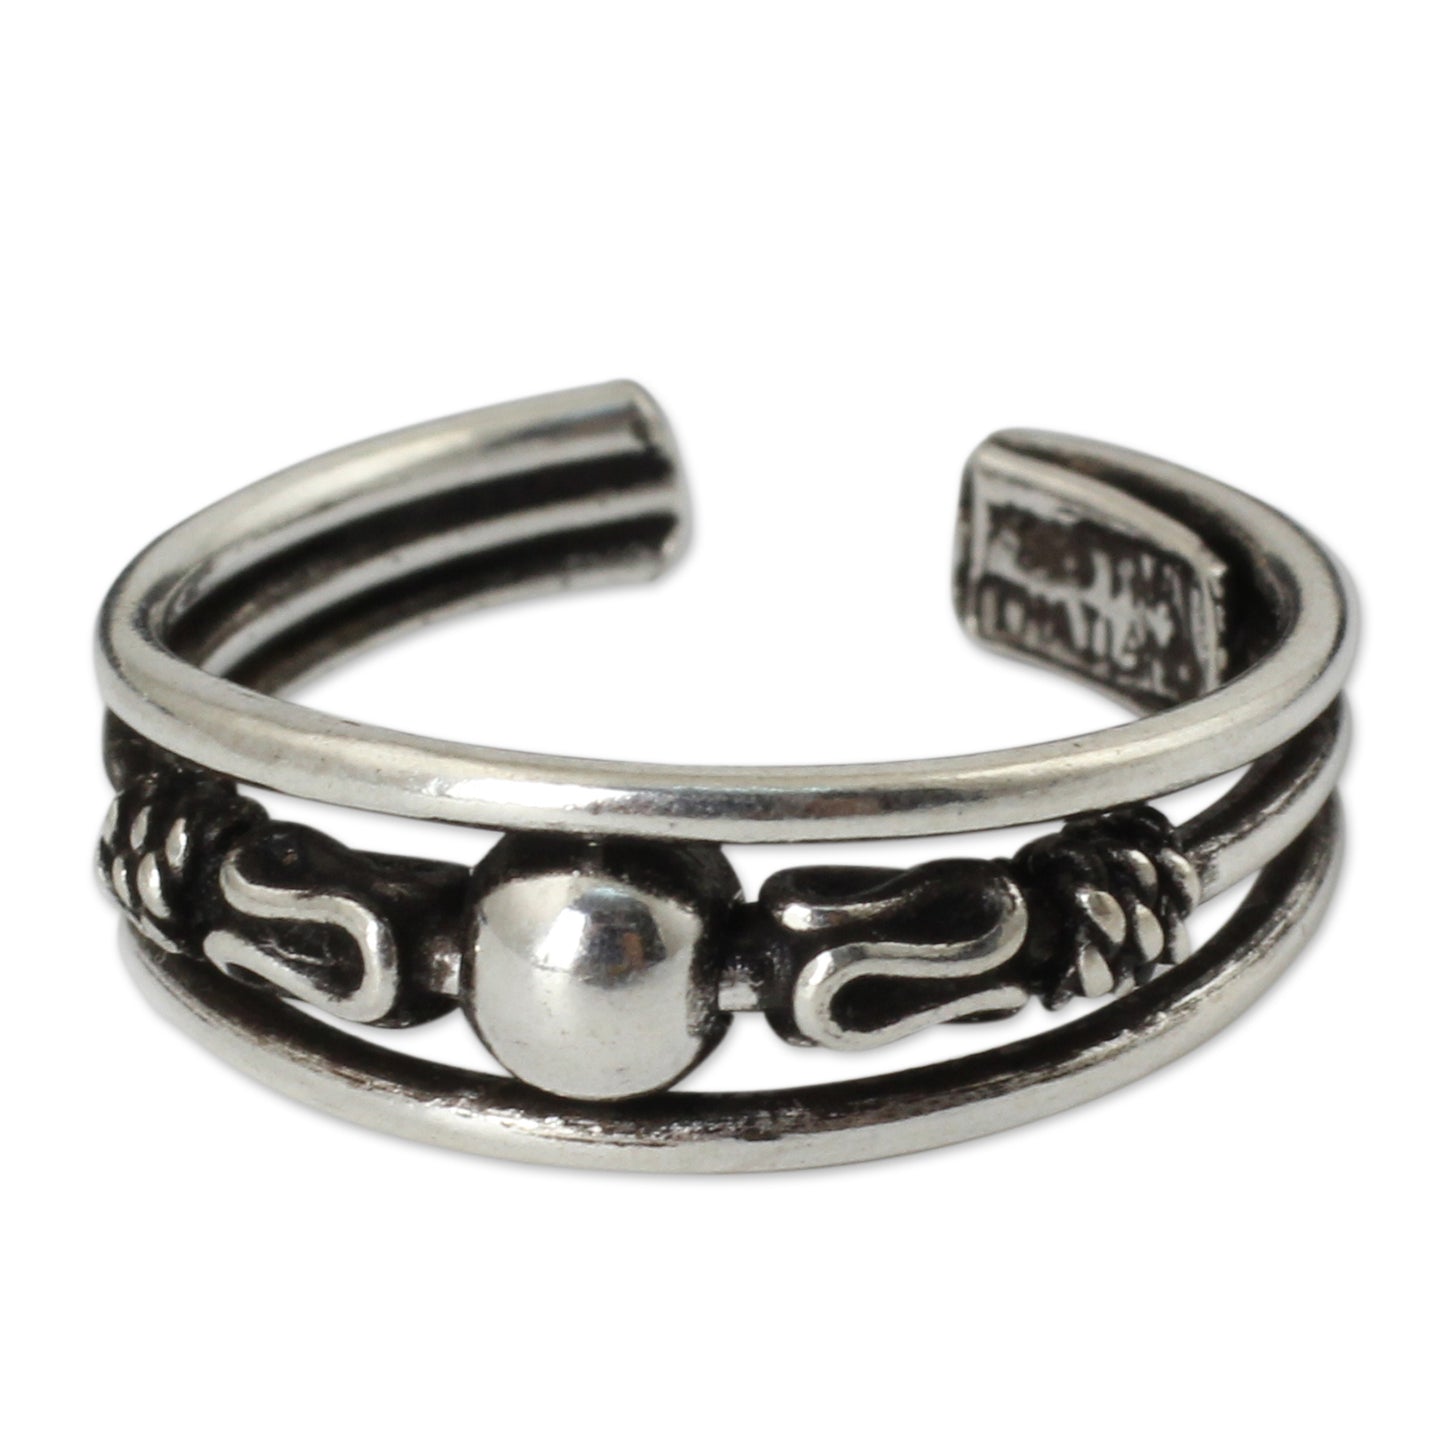 Moonwalk Toe Ring in Sterling Silver Thai Artisan Jewelry